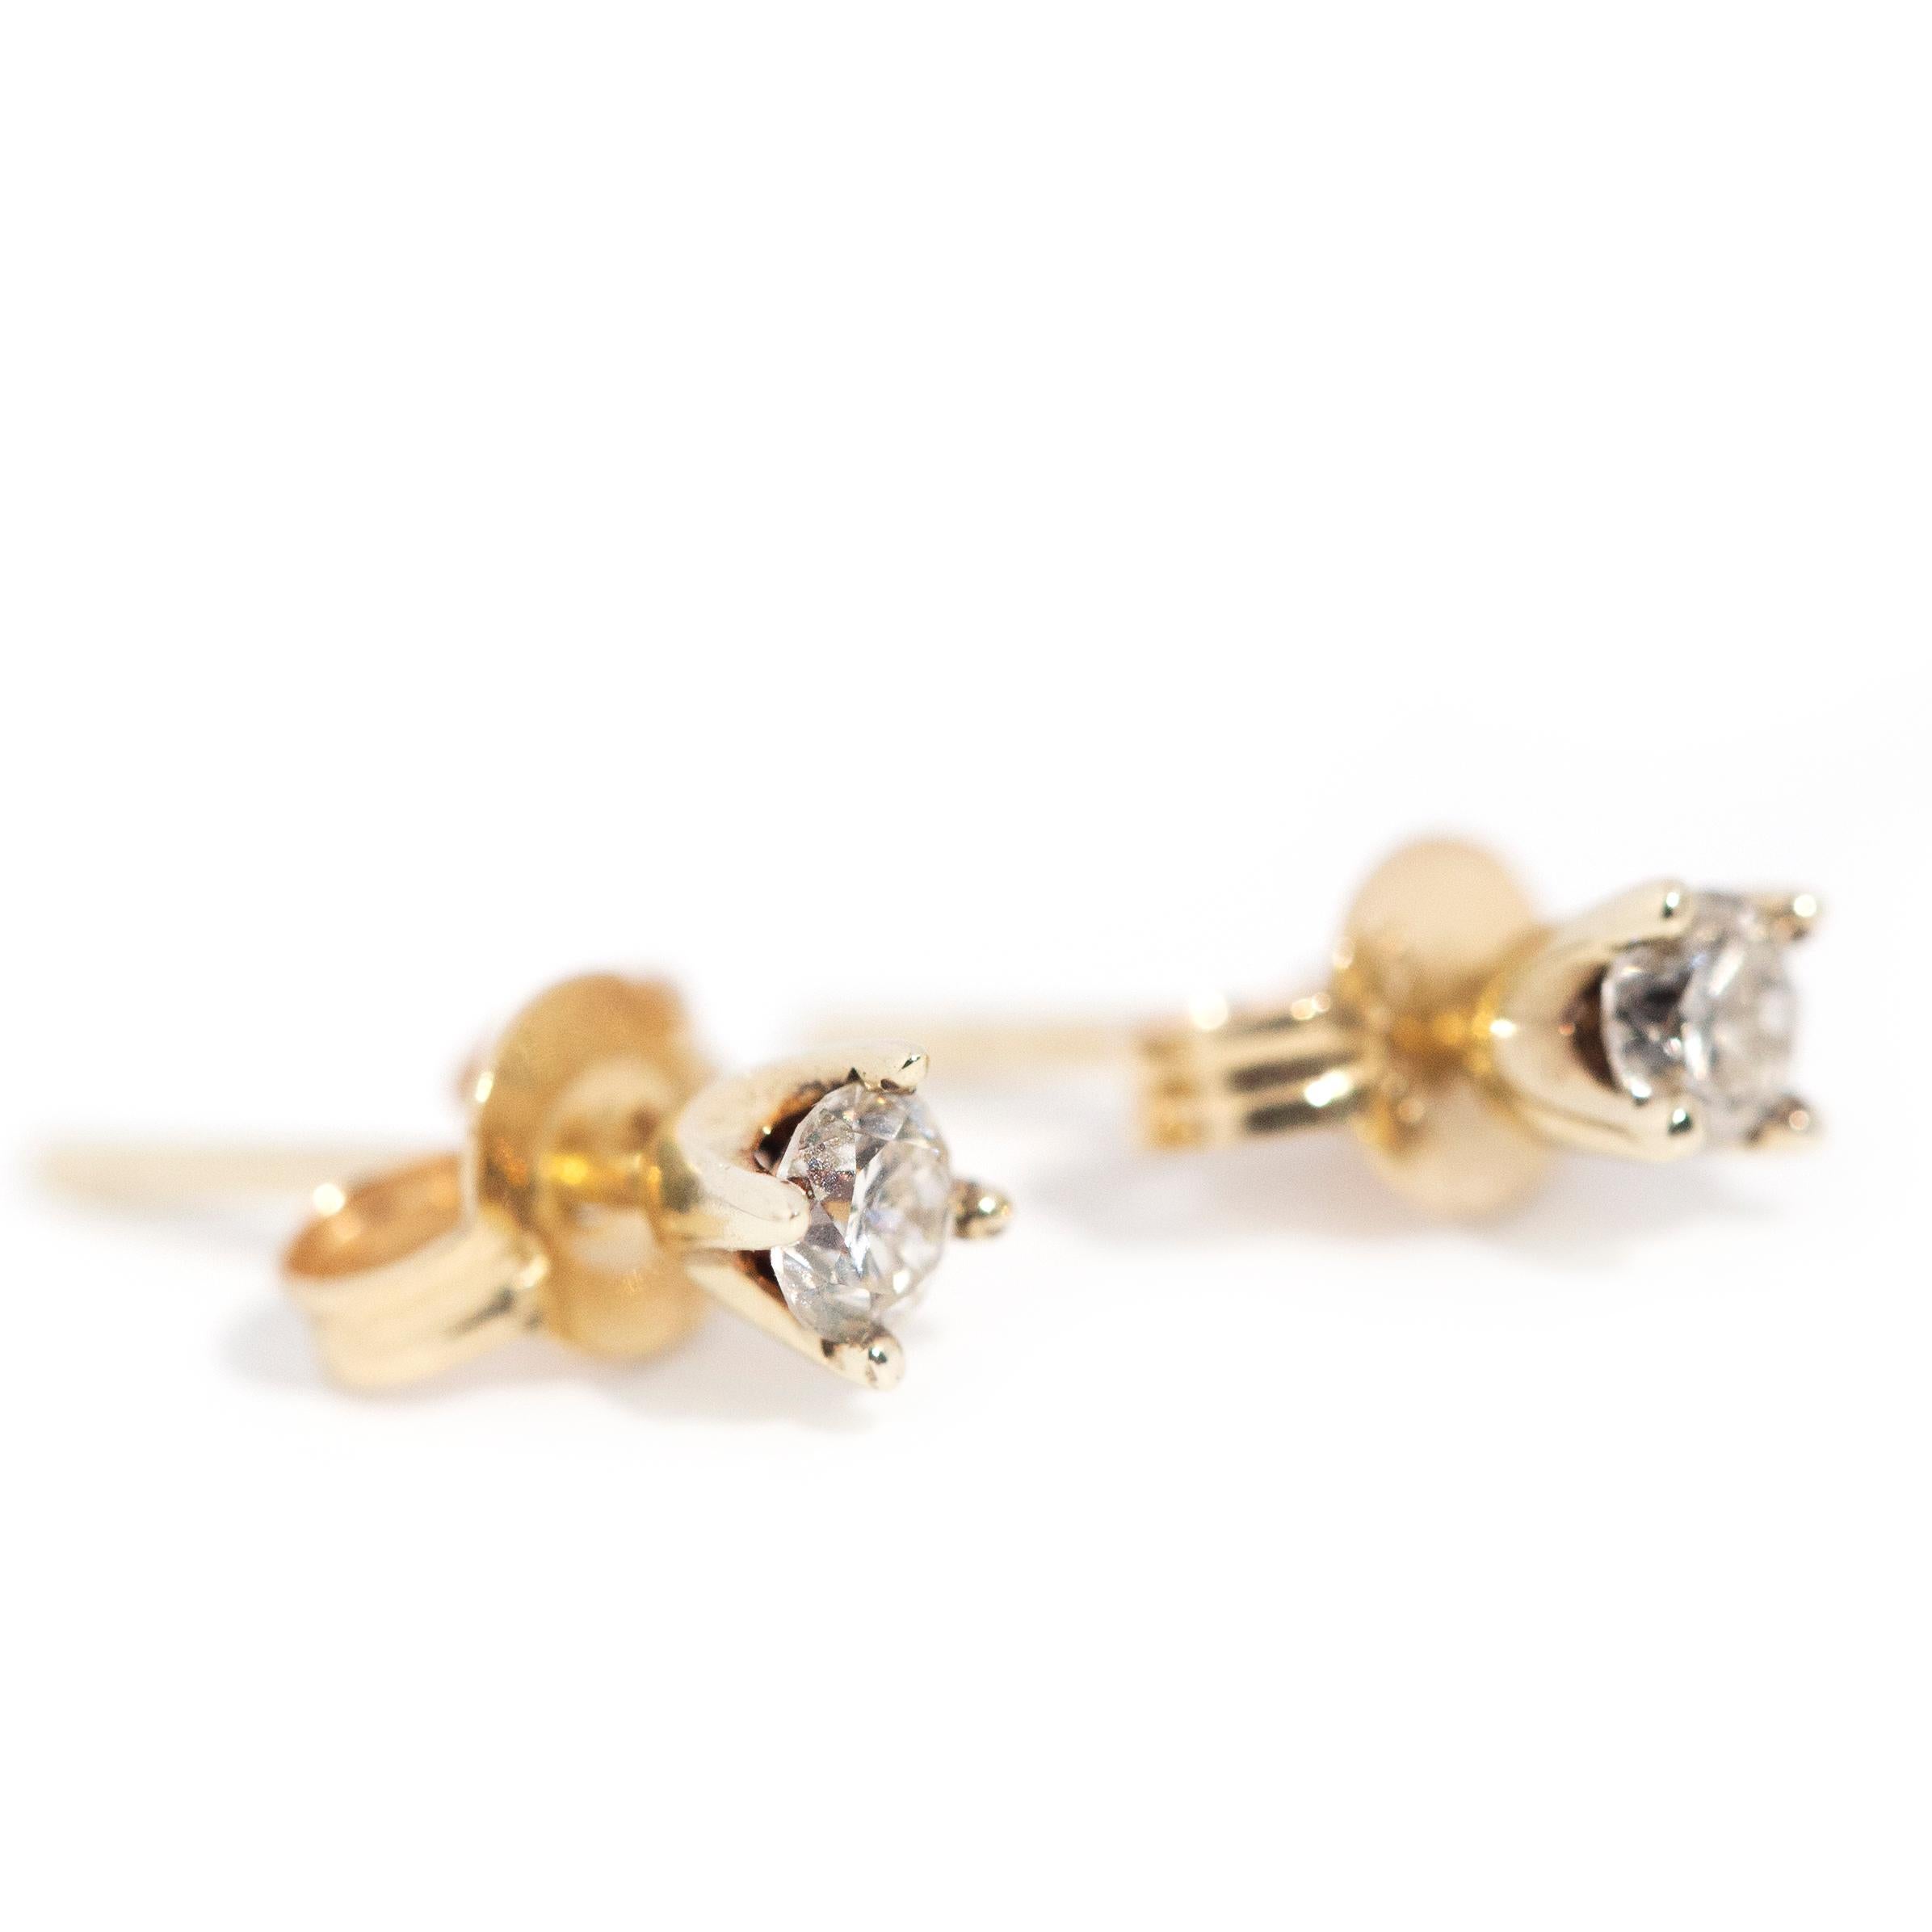 Women's Vintage Circa 1990s 9 Carat White Gold Solitaire Diamond Stud Style Earrings